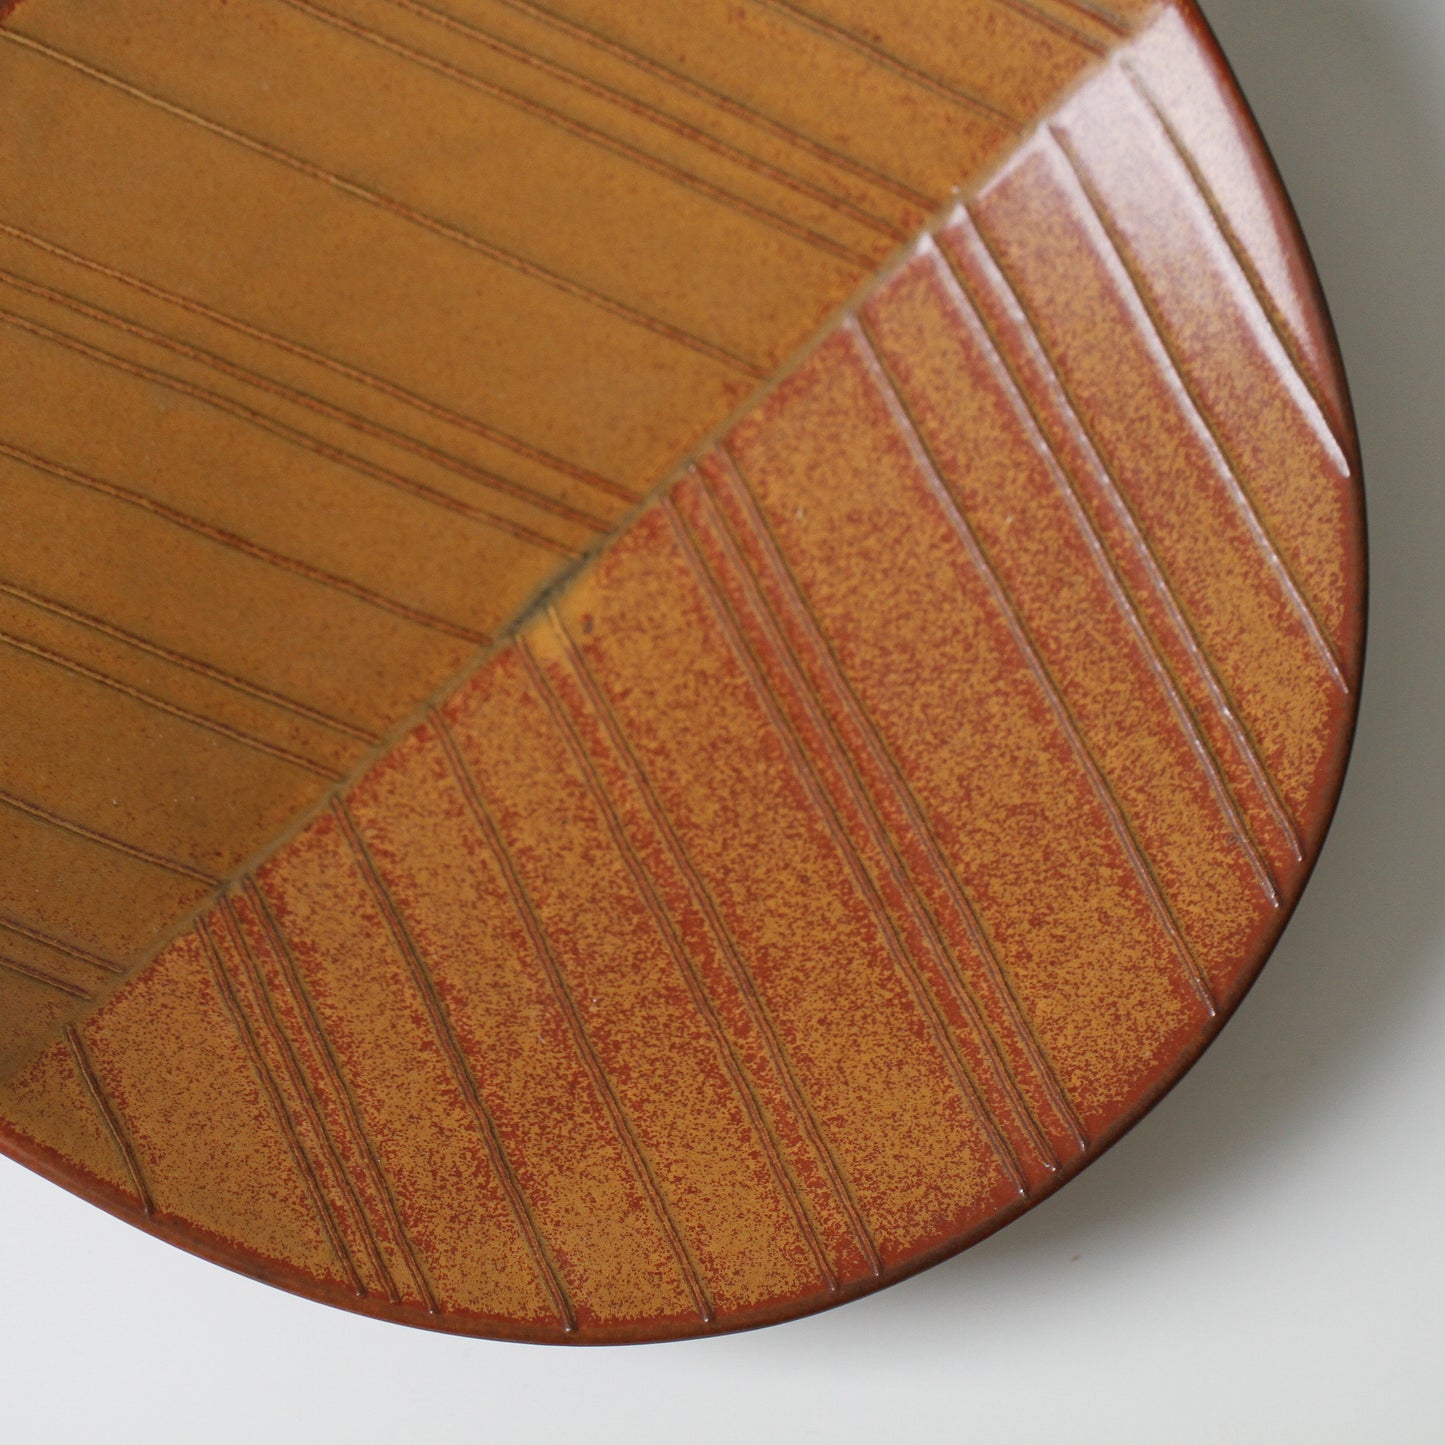 HAZARA Leaf Plate Series (Deep Plate)